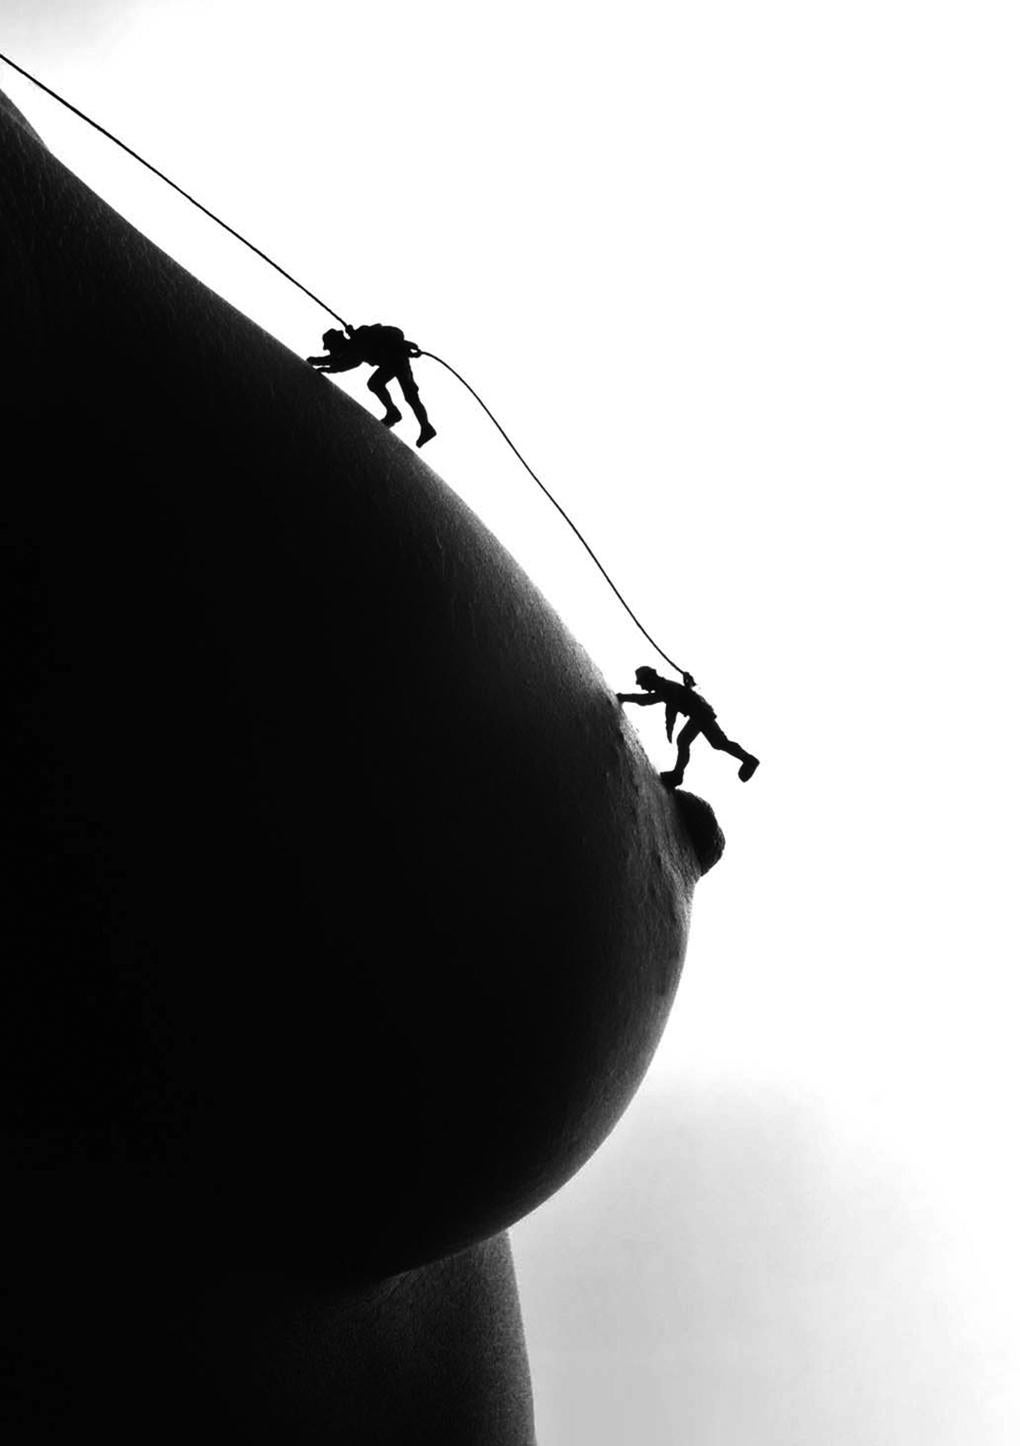 Allan I. Teger Black and White Photograph - Mountain climbers - black and white photography 